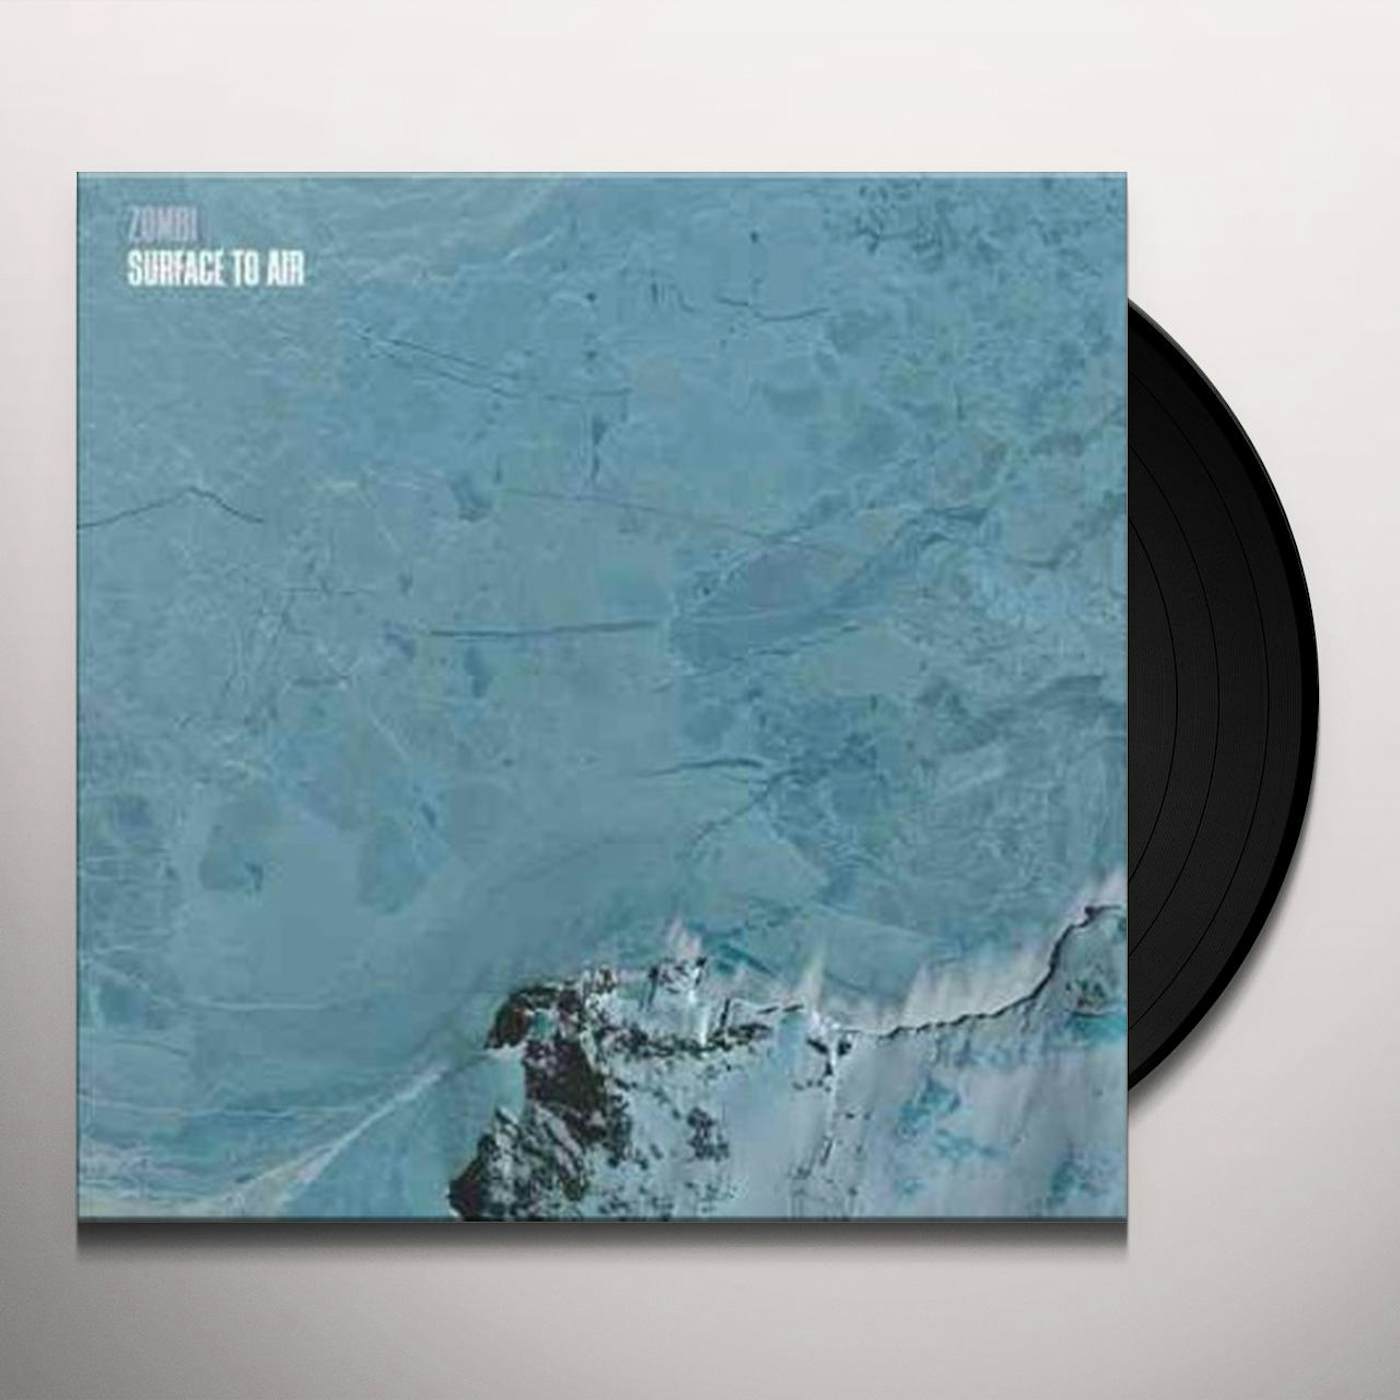 Zombi Surface To Air Vinyl Record